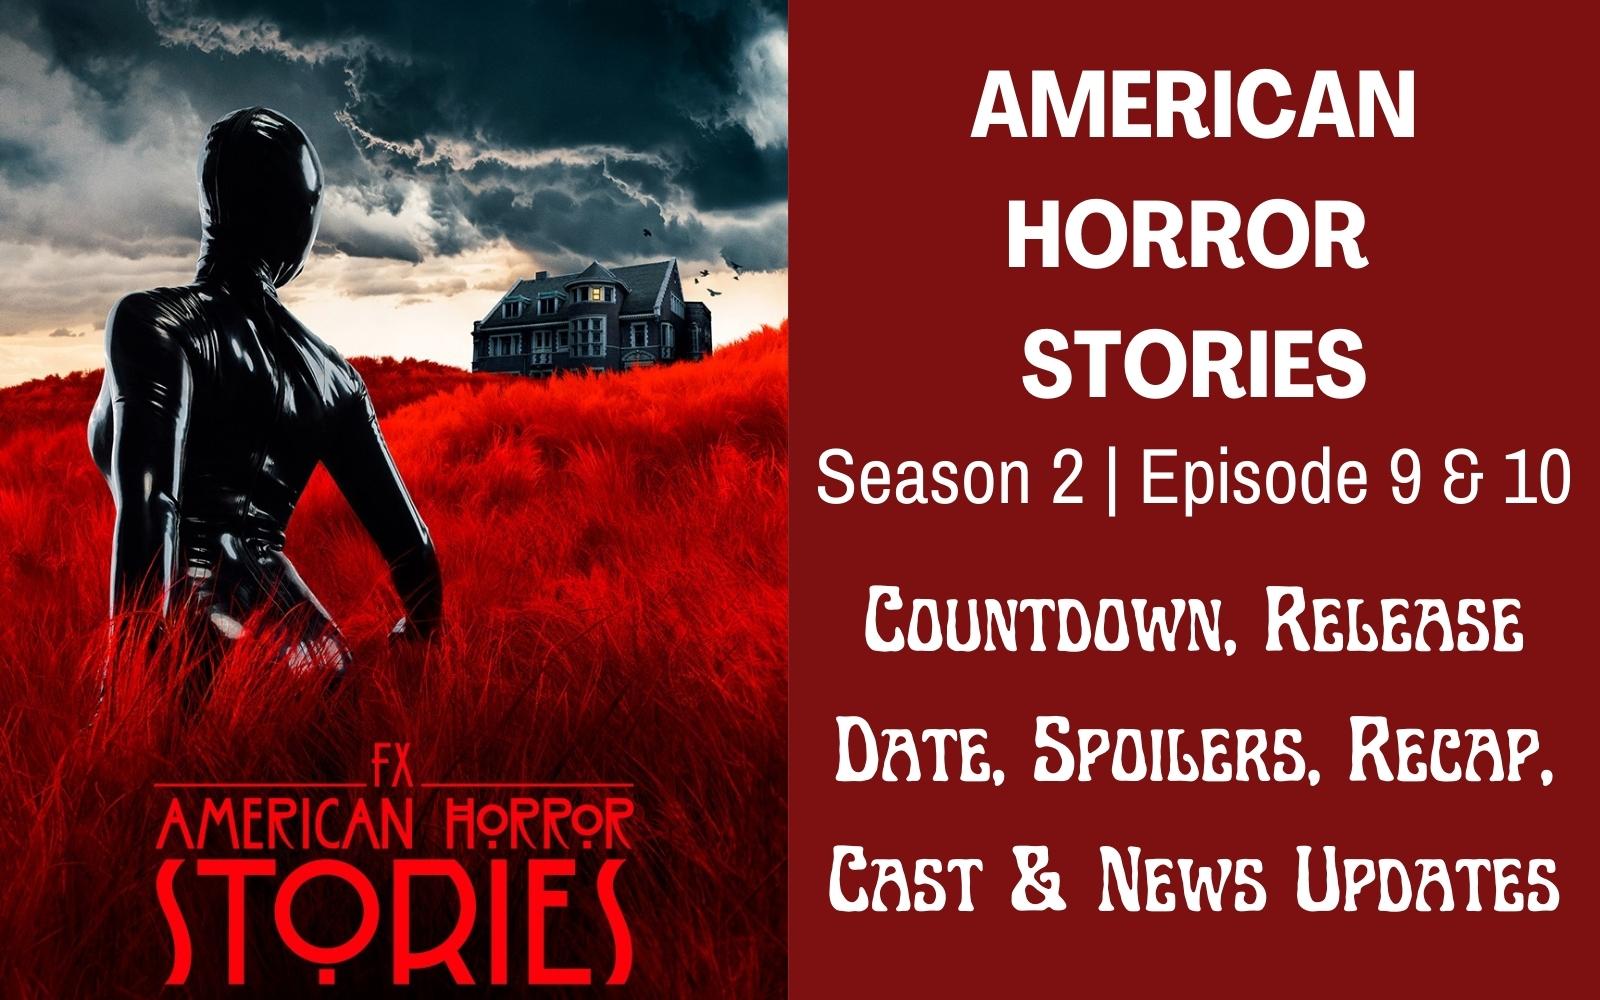 American Horror Stories Season 2 Episode 9 & 10 ⇒ Countdown, Release Date, Spoilers, Recap, Cast & News Updates